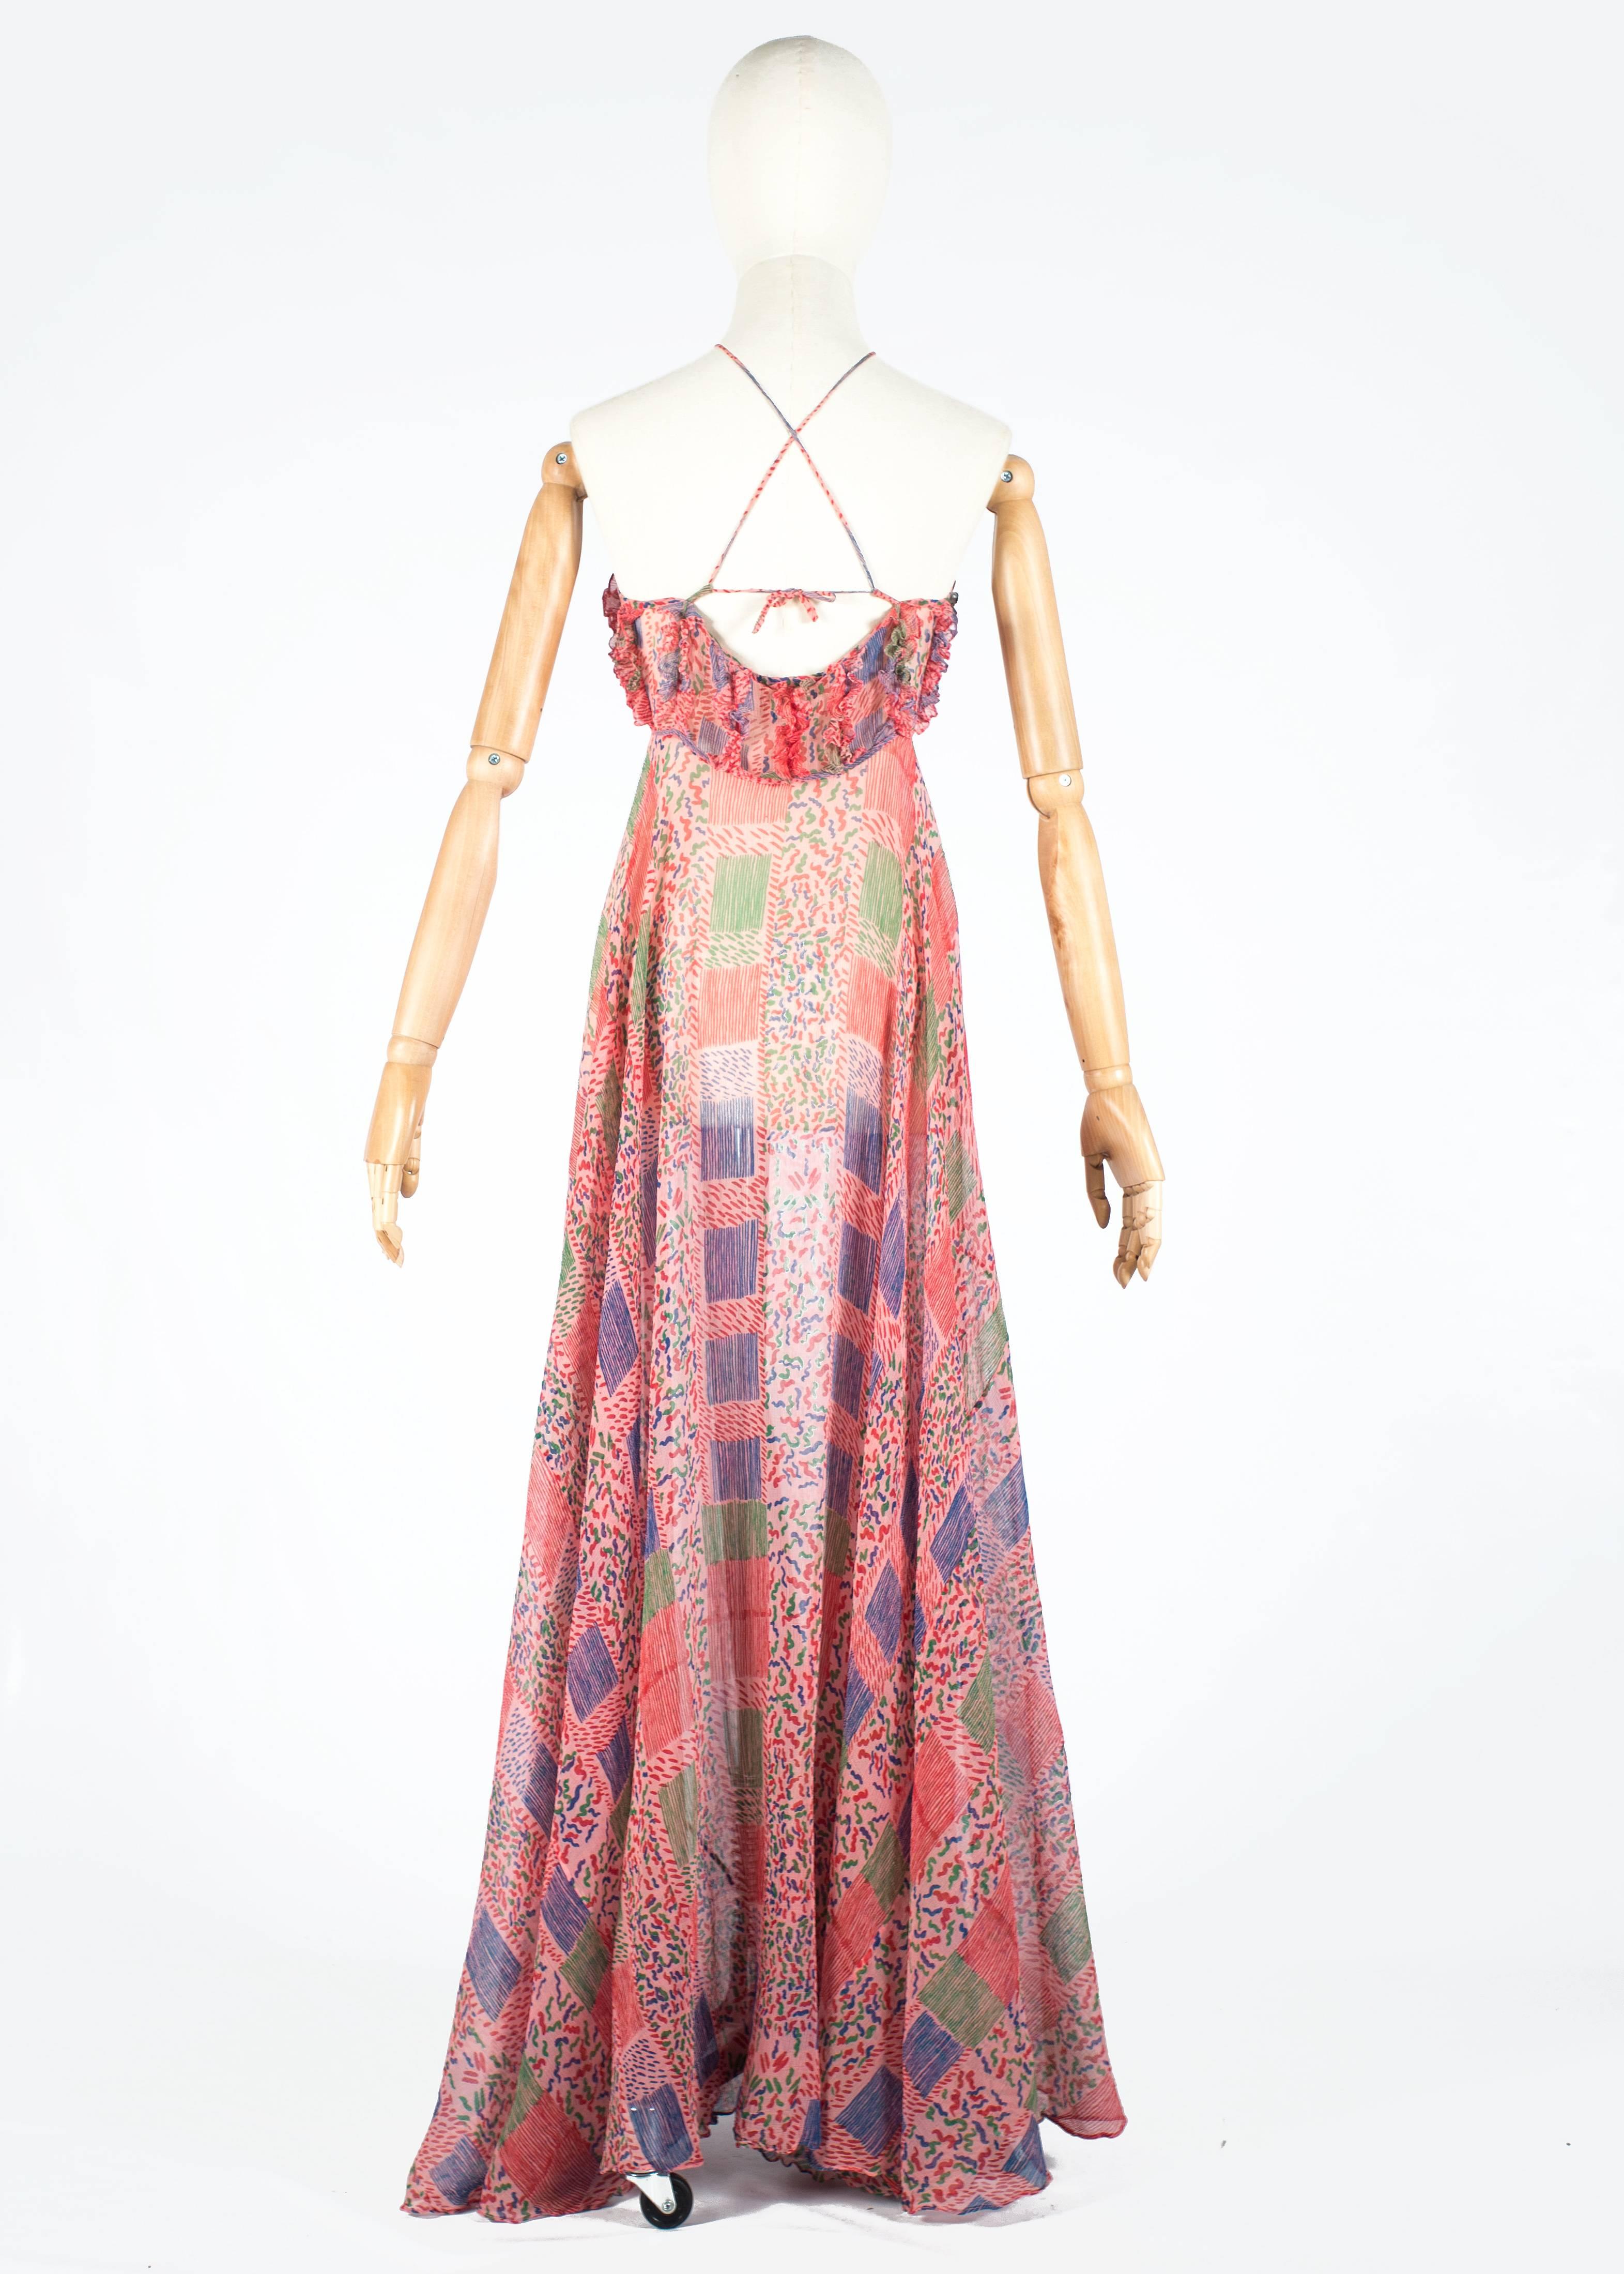 Ossie Clark / Celia Birtwell chiffon maxi dress with criss-cross lacing, c1976 2